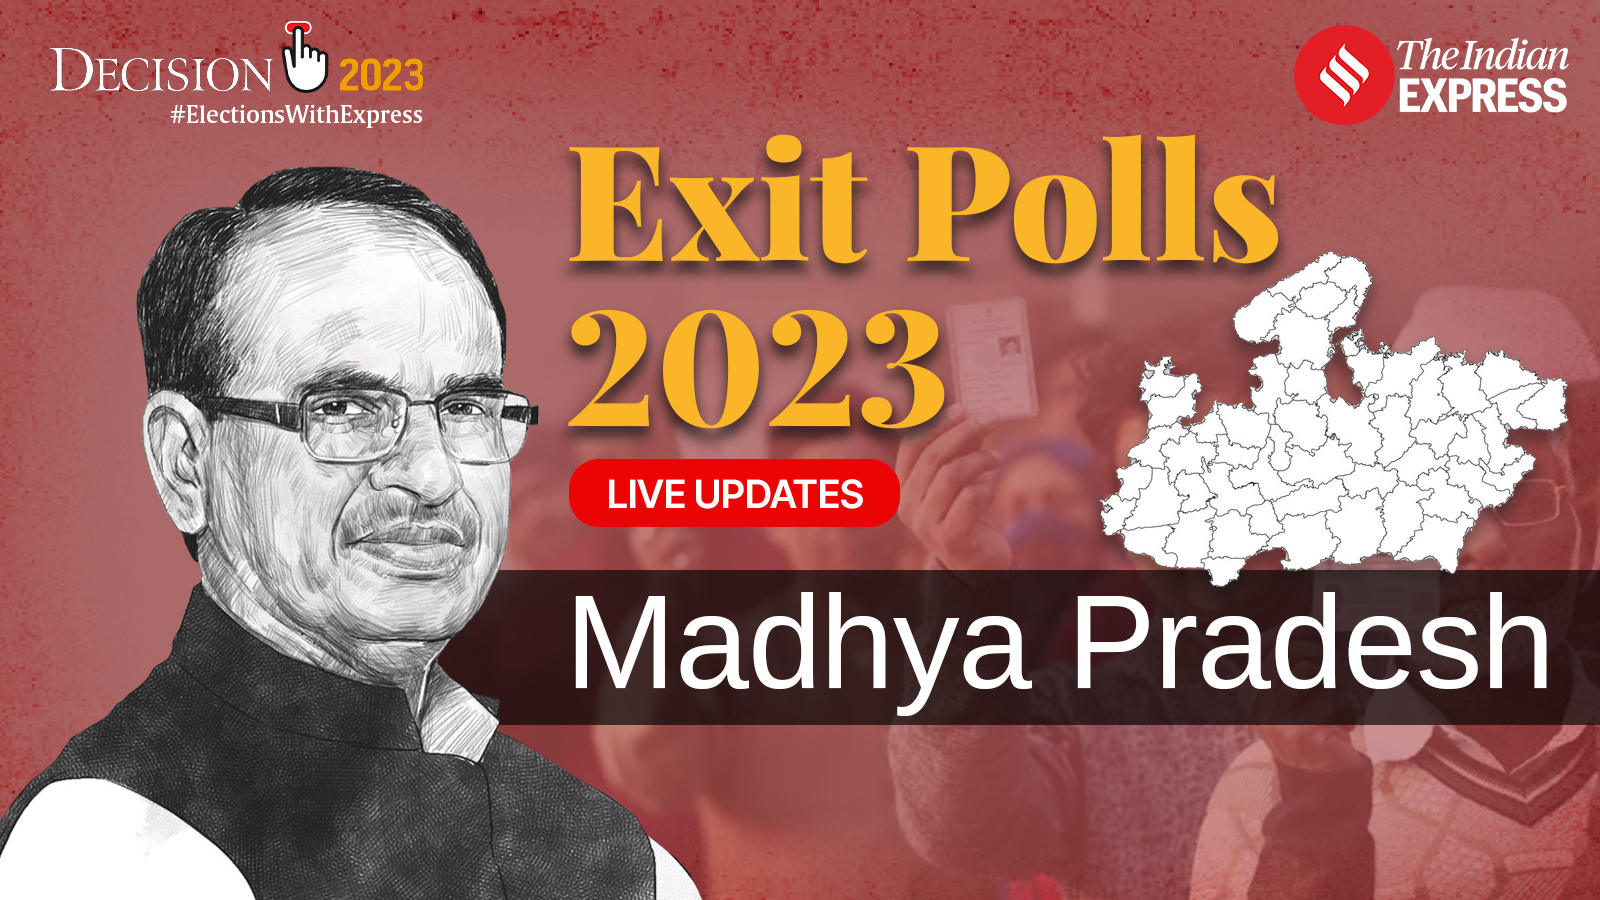 Madhya Pradesh Exit Poll 2023 Highlights Pollsters predict return of